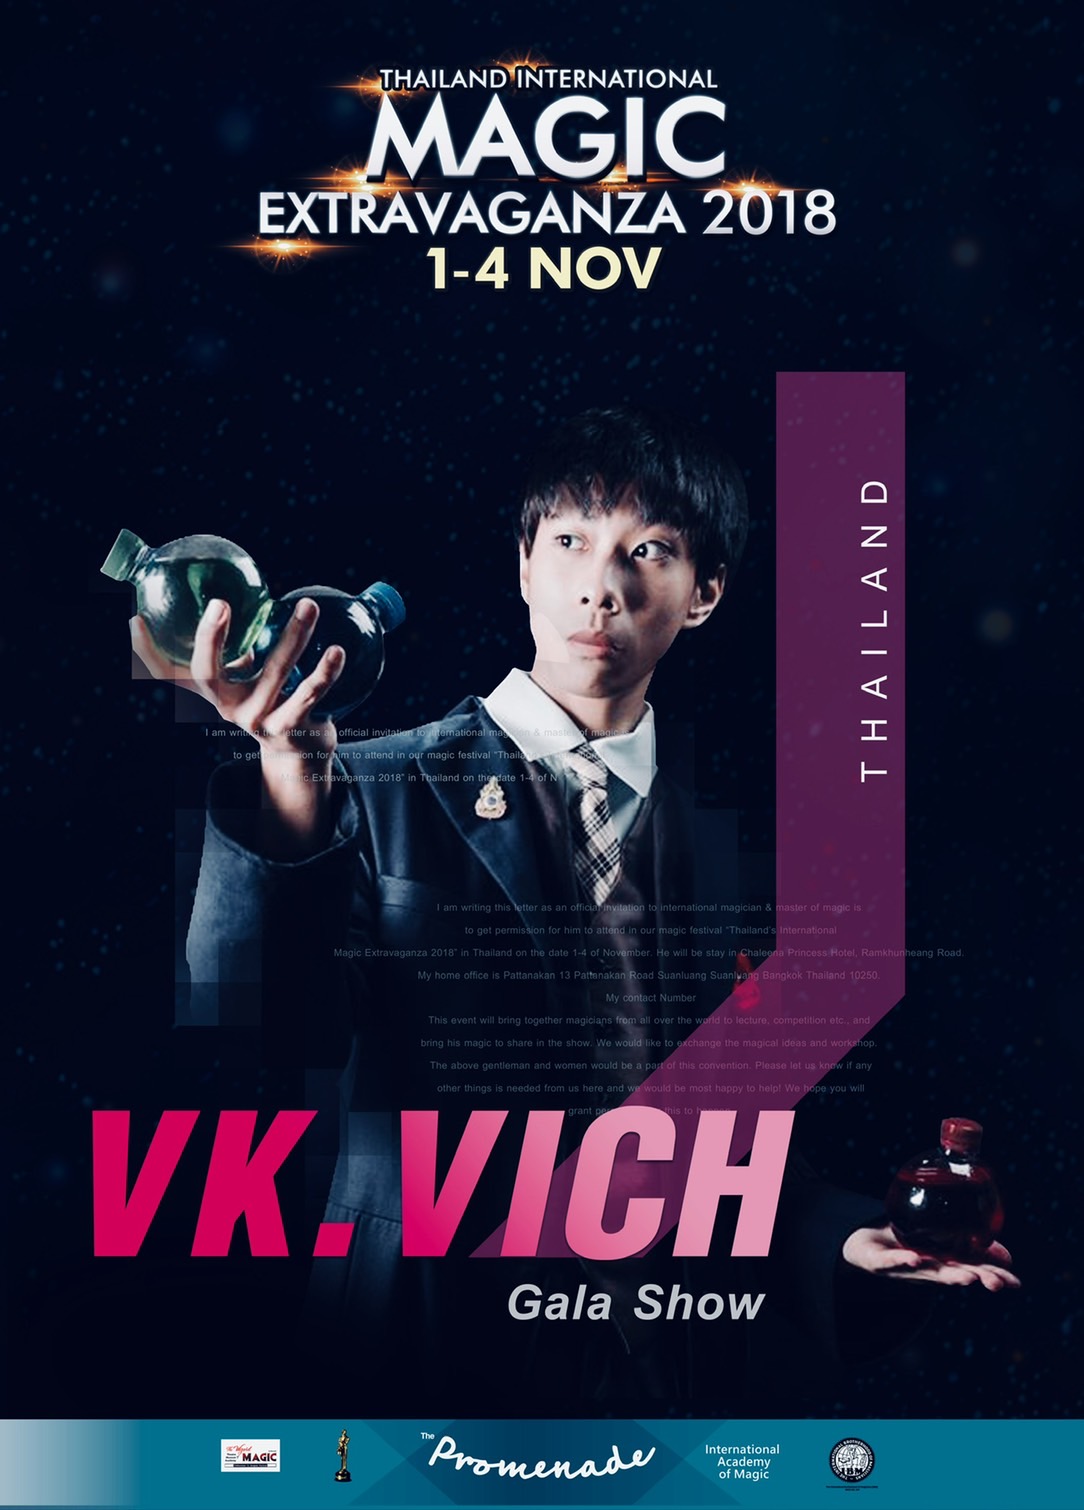 Thailand Magic Extravaganza มหกรรมมายากล เทศกาลมายากล ระดับโลก VK.Vich Vichayut Kanungchoti วิชยุตม์ คนึงโชติ มายากล รับแสดงมายากล Magic Class รับสอนมายากล มายากลเวที การแสดง Stage Magic แสดงวันเด็ก วันปีใหม่ Alain Simonov Manipulation Card Magic